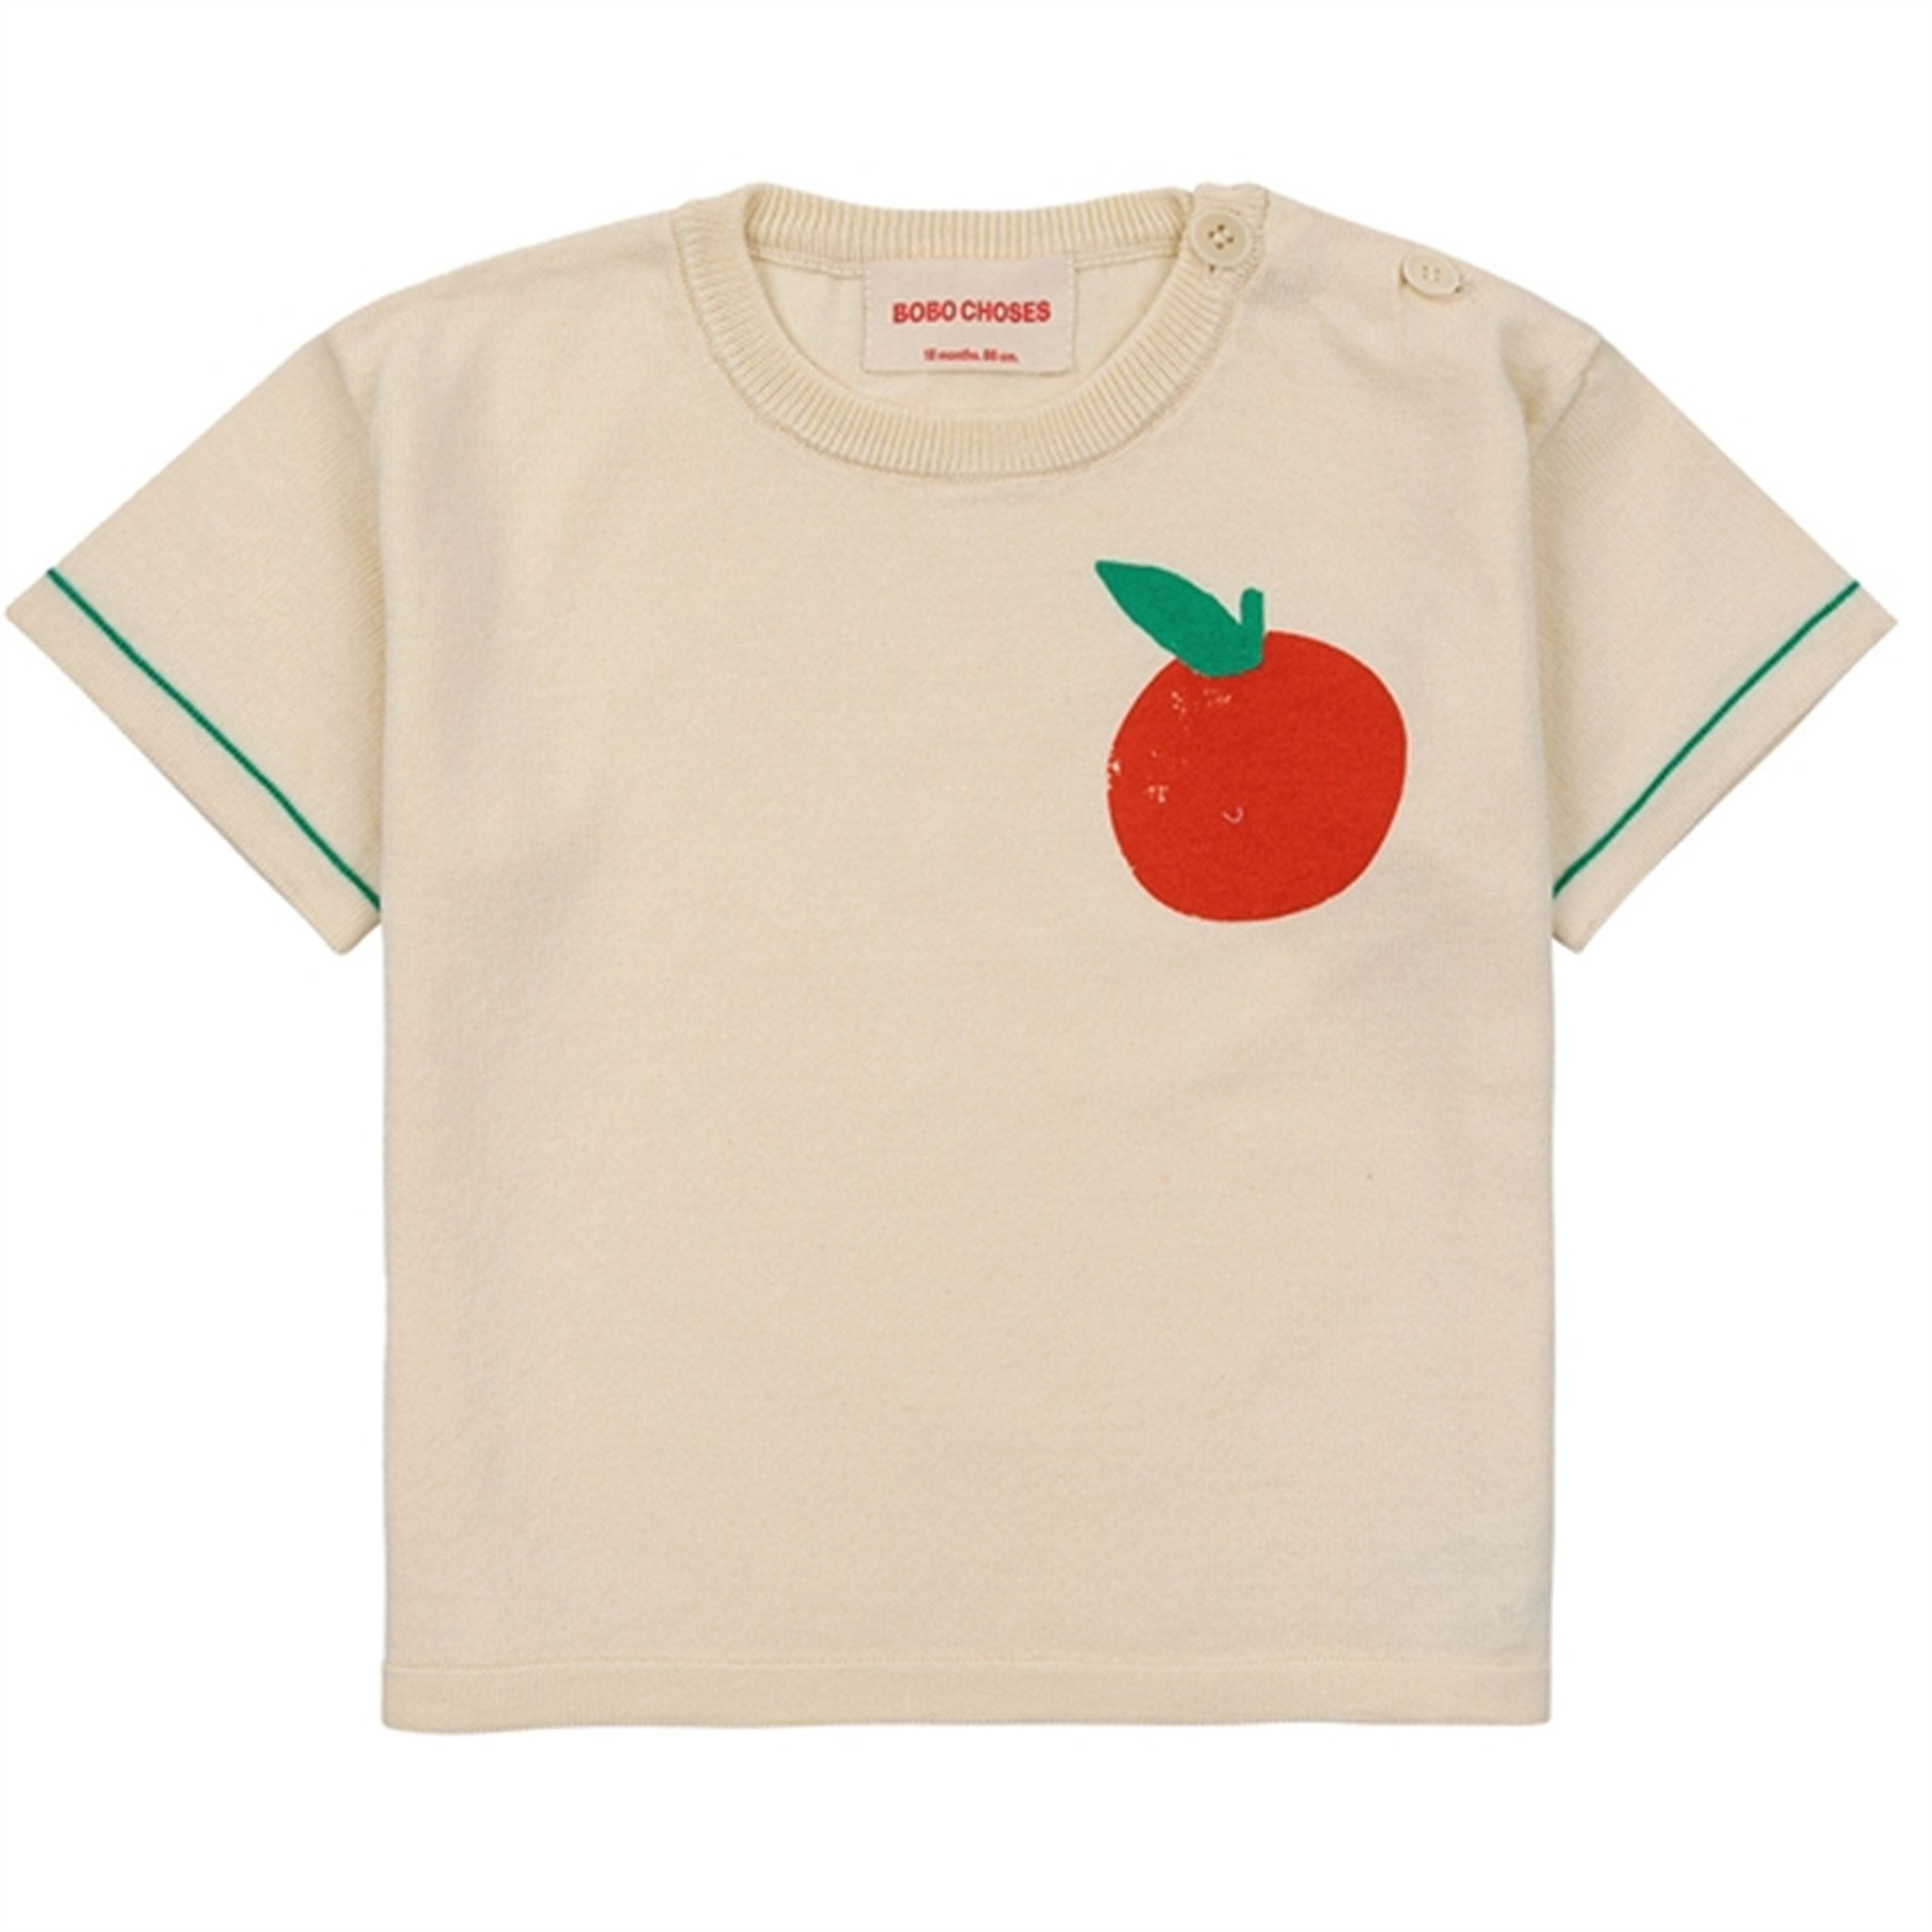 Bobo Choses Bebis Tomato Knitted T-Shirt Offwhite